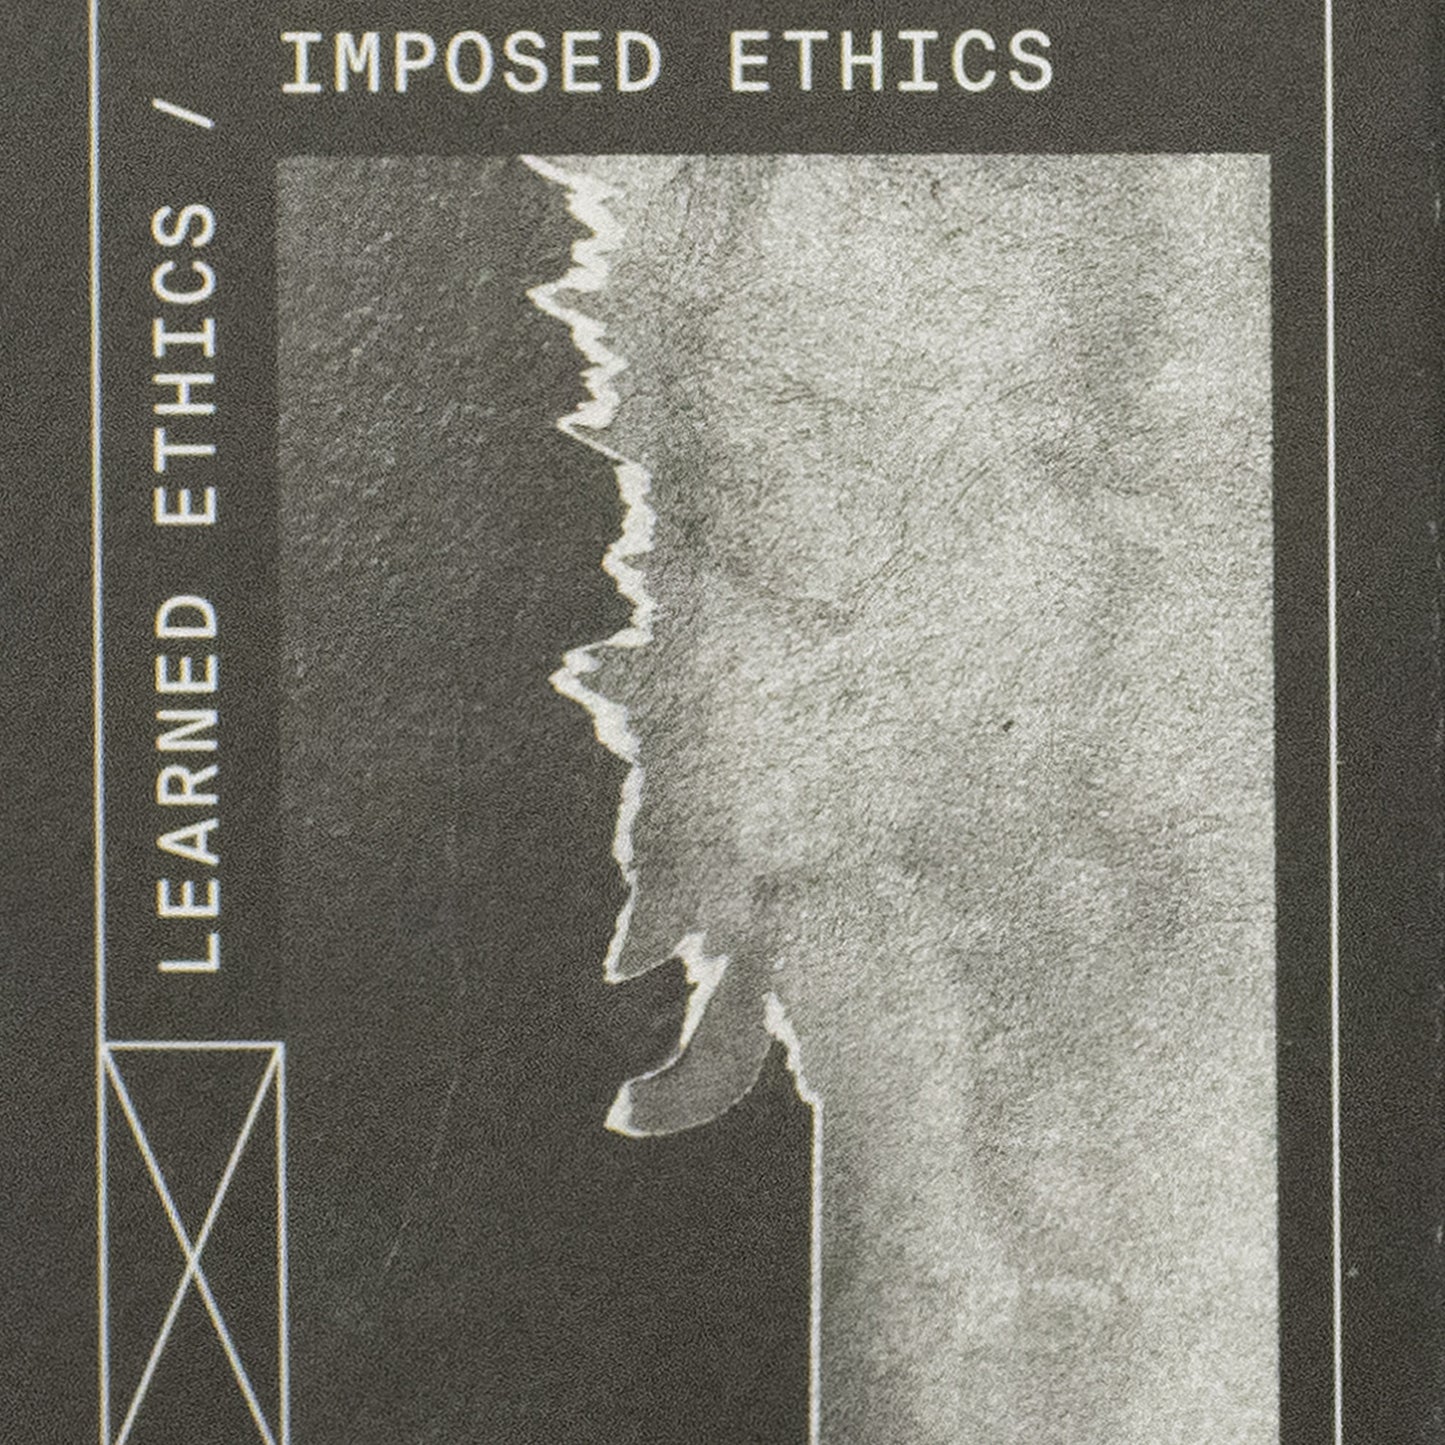 CASS / KOHL - Learned Ethics - Imposed Ethics